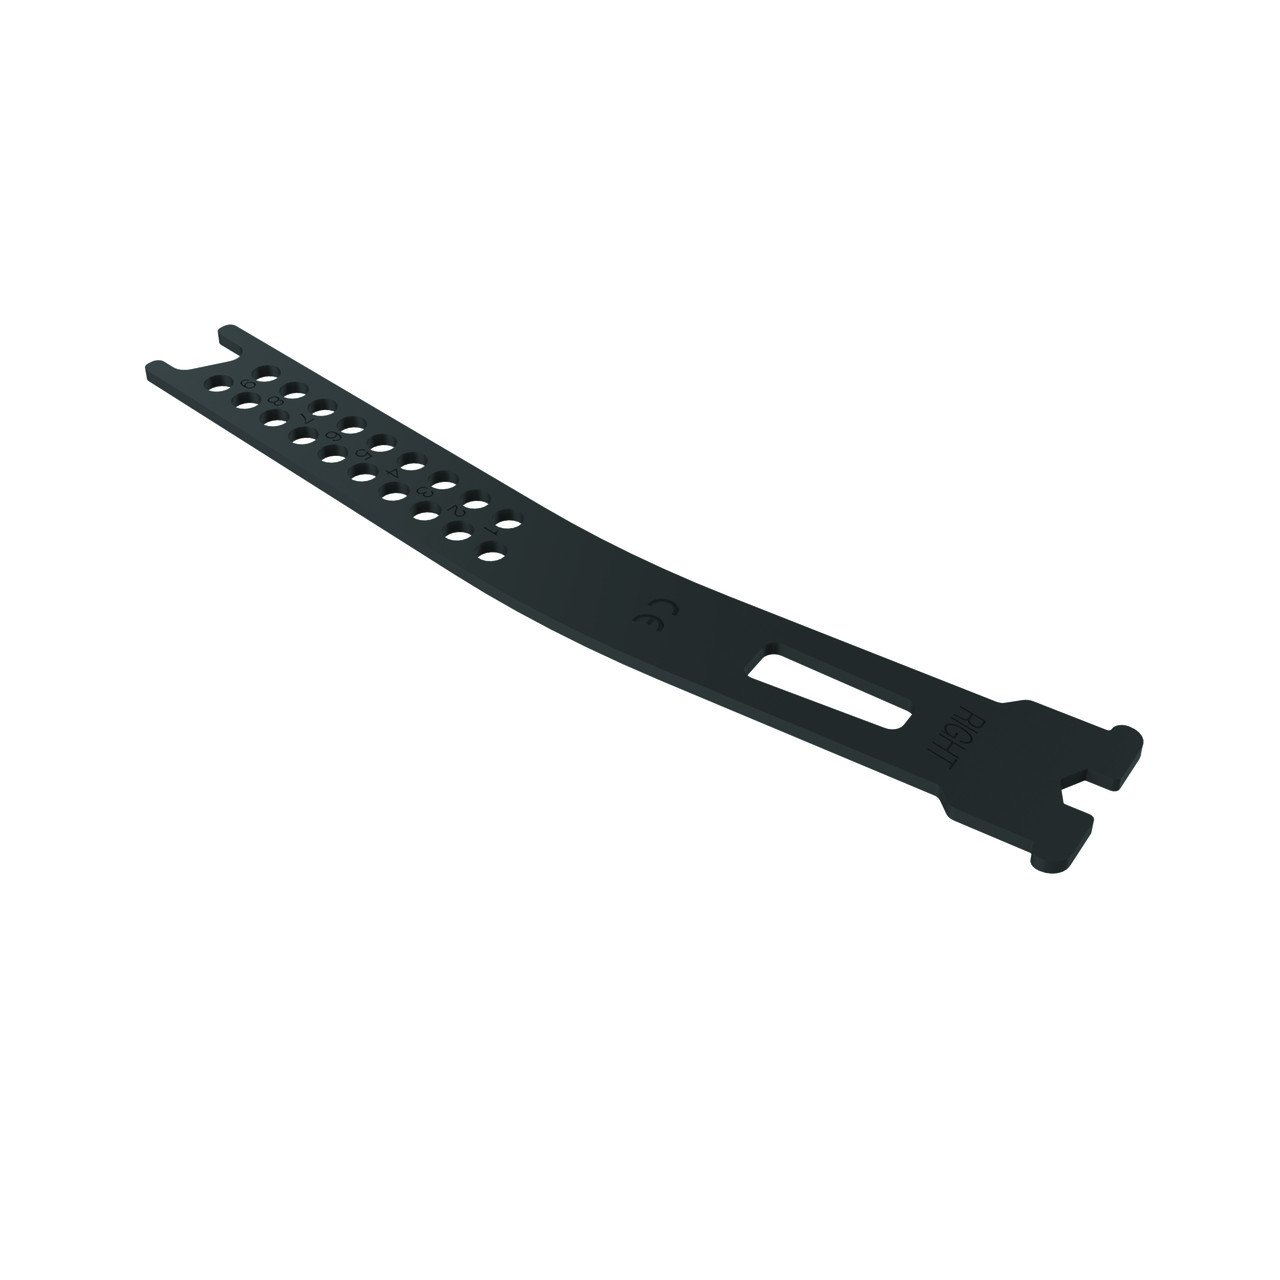 Petzl Linking Bars (T03A BA), in black colour